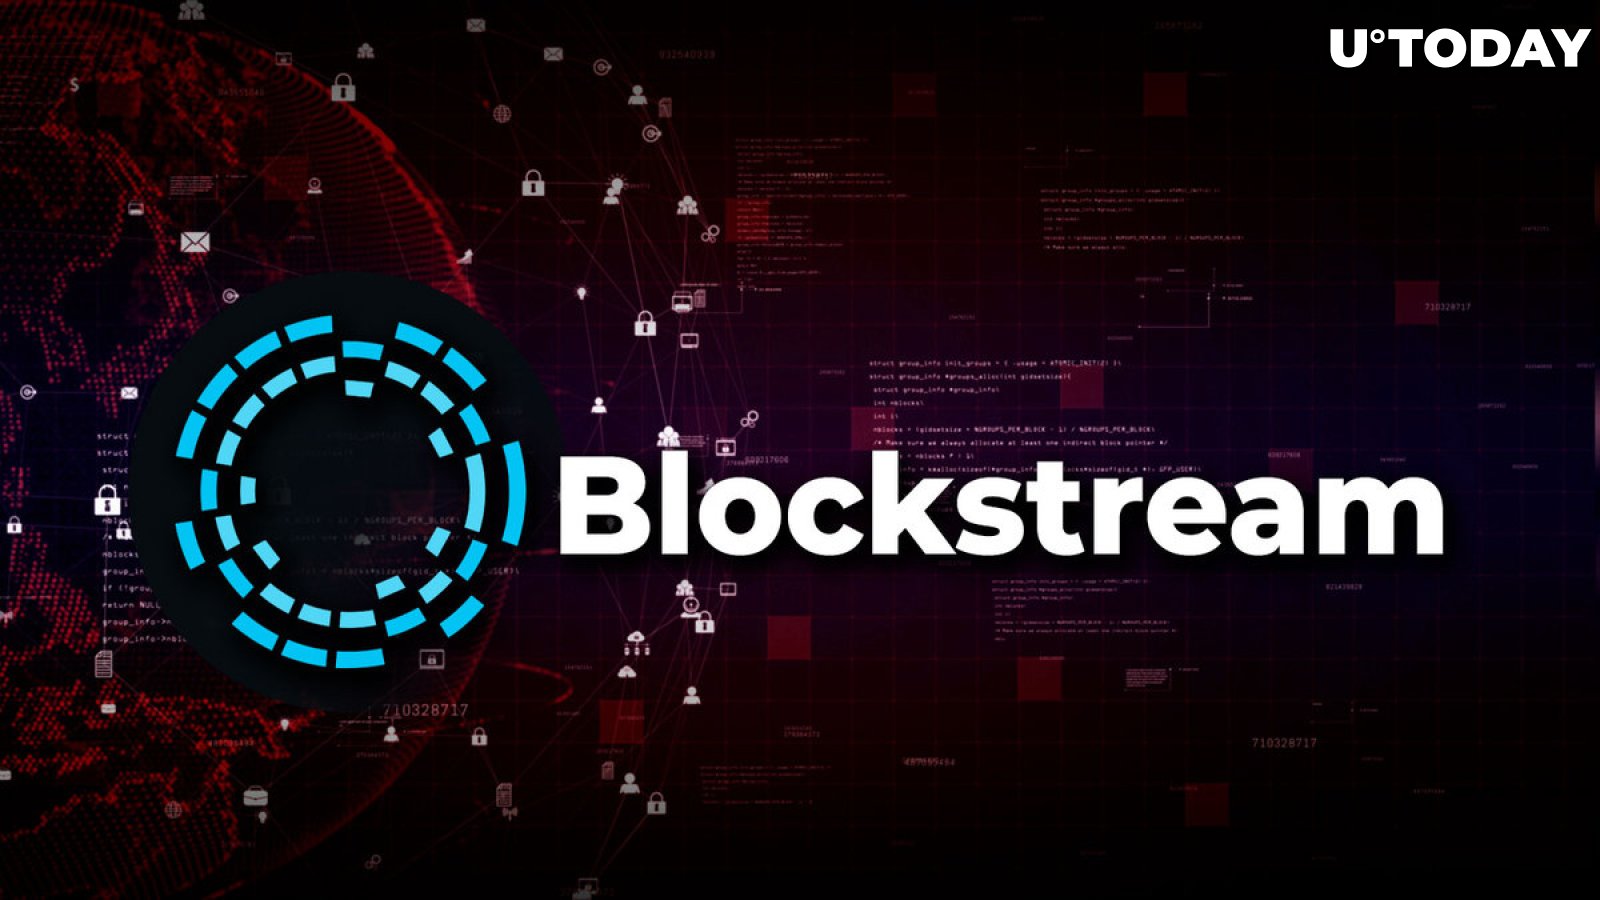 Blockstream Jade Review 2023: A Safe Bitcoin Wallet